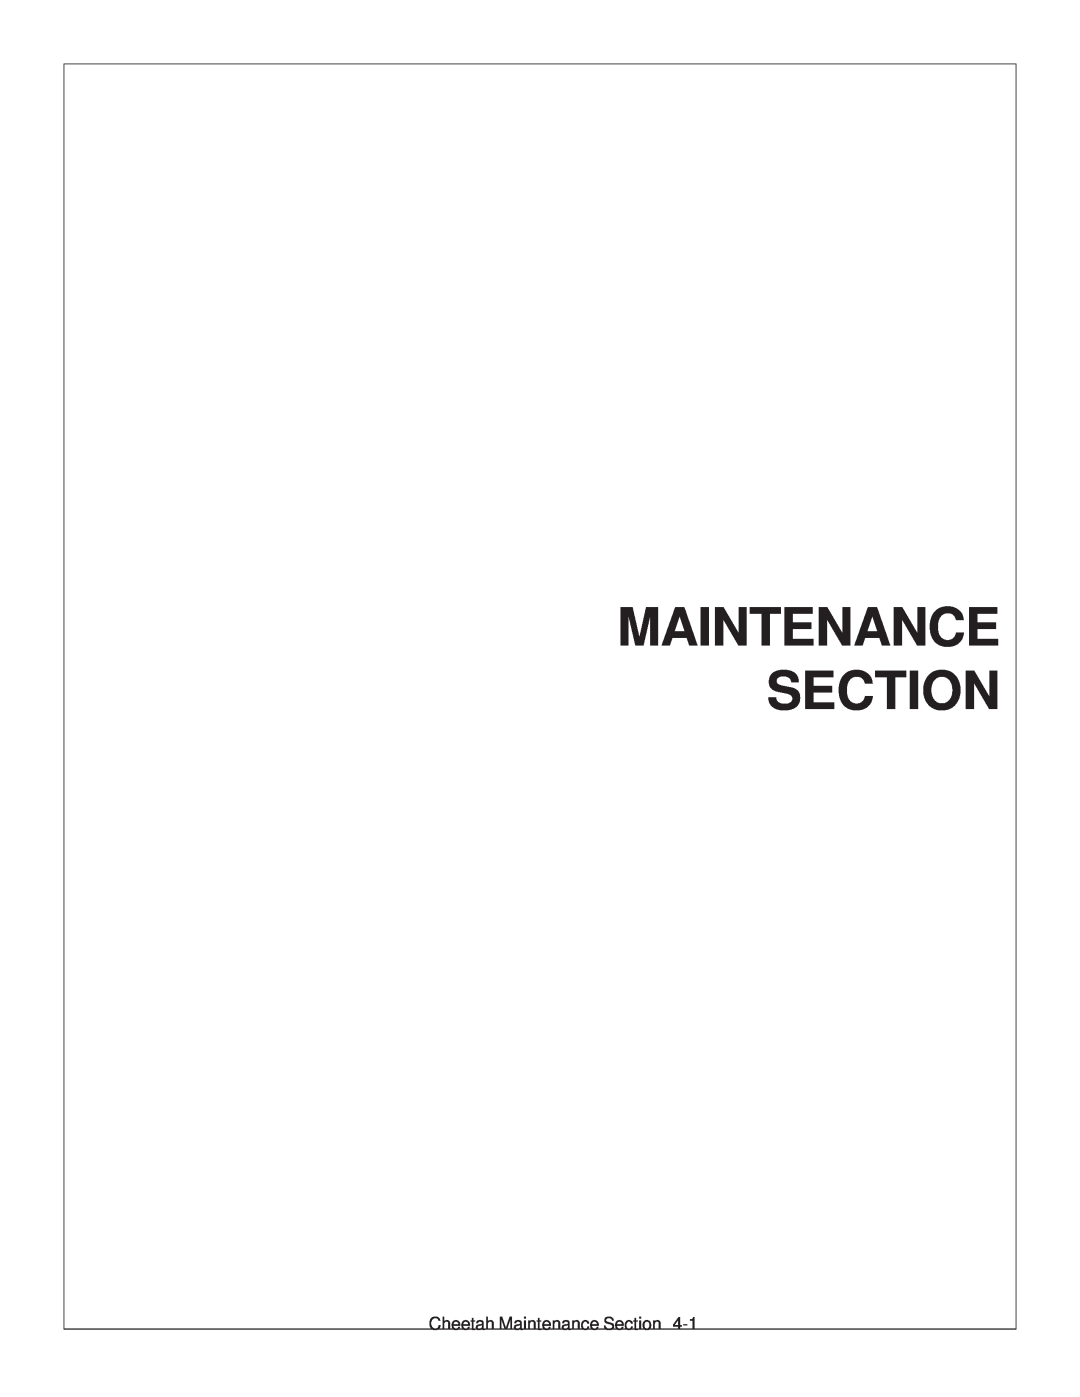 Tiger Products Co., Ltd JD 5083E, JD 5101E, JD 5093E manual Cheetah Maintenance Section 